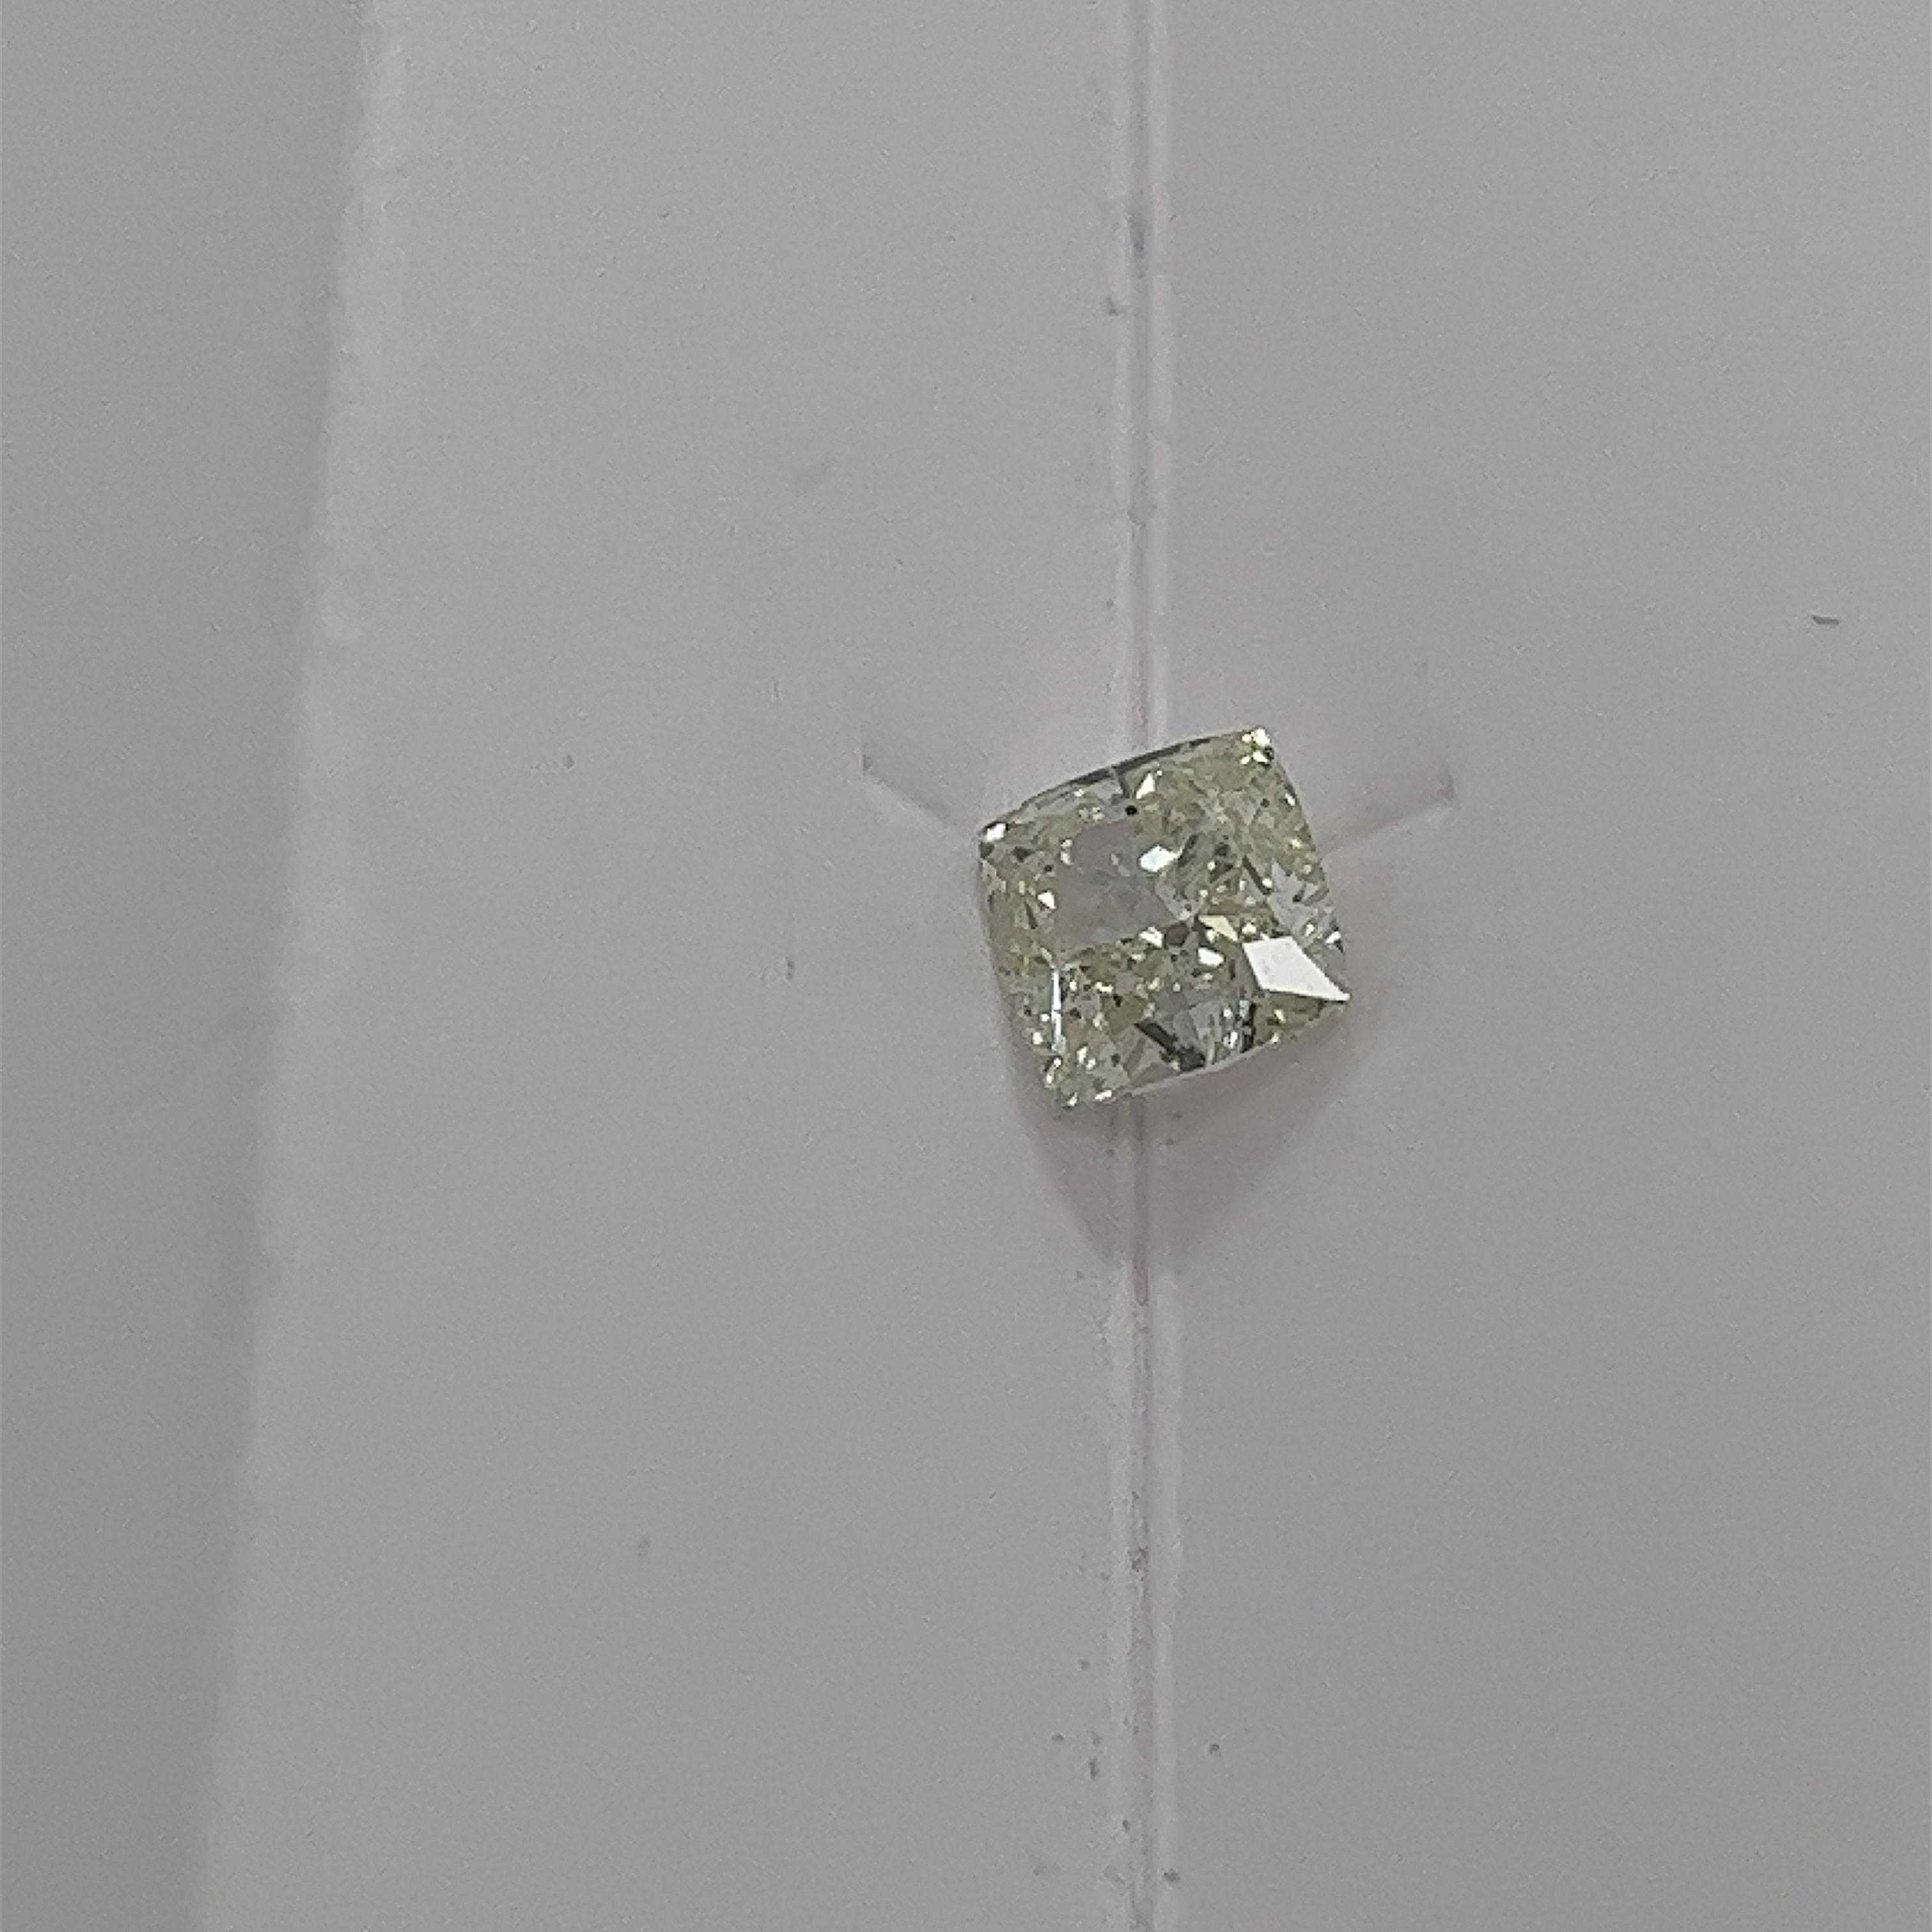 Loose GIA diamond 1.07ct natural fancy light yellow green colour.
Total Diamond Weight: 1.07ct 
Diamond Colour: fancy light yellow green
Diamond Clarity: SI2
SMS9234